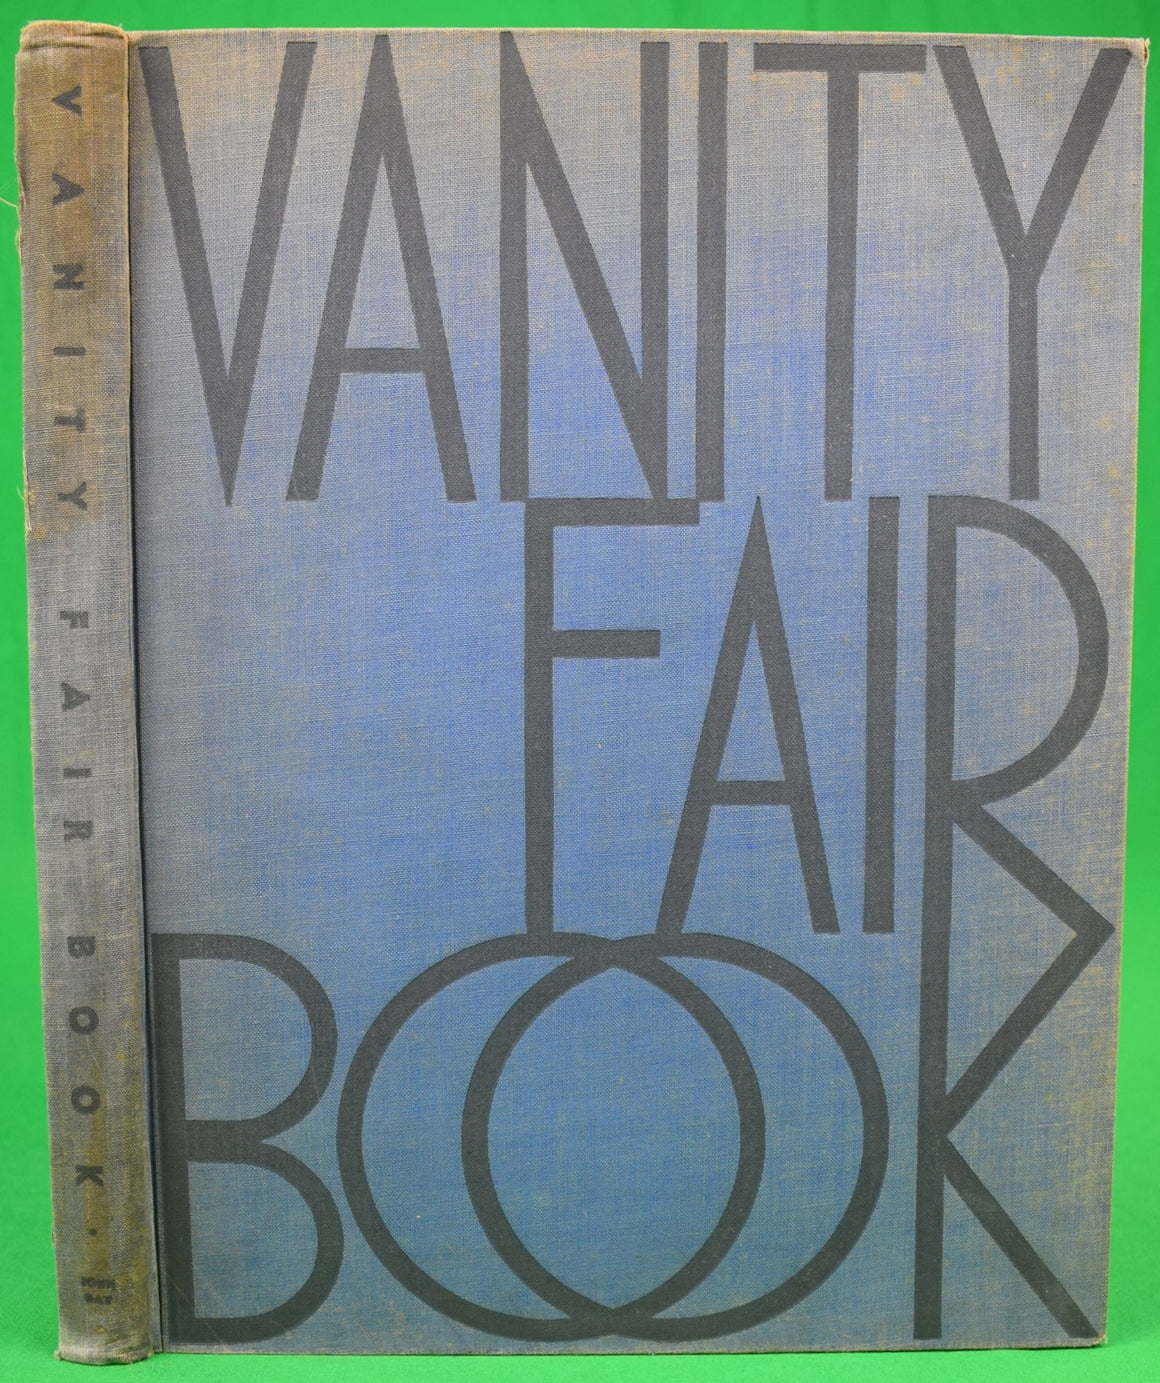 "Vanity Fair Book" 1931